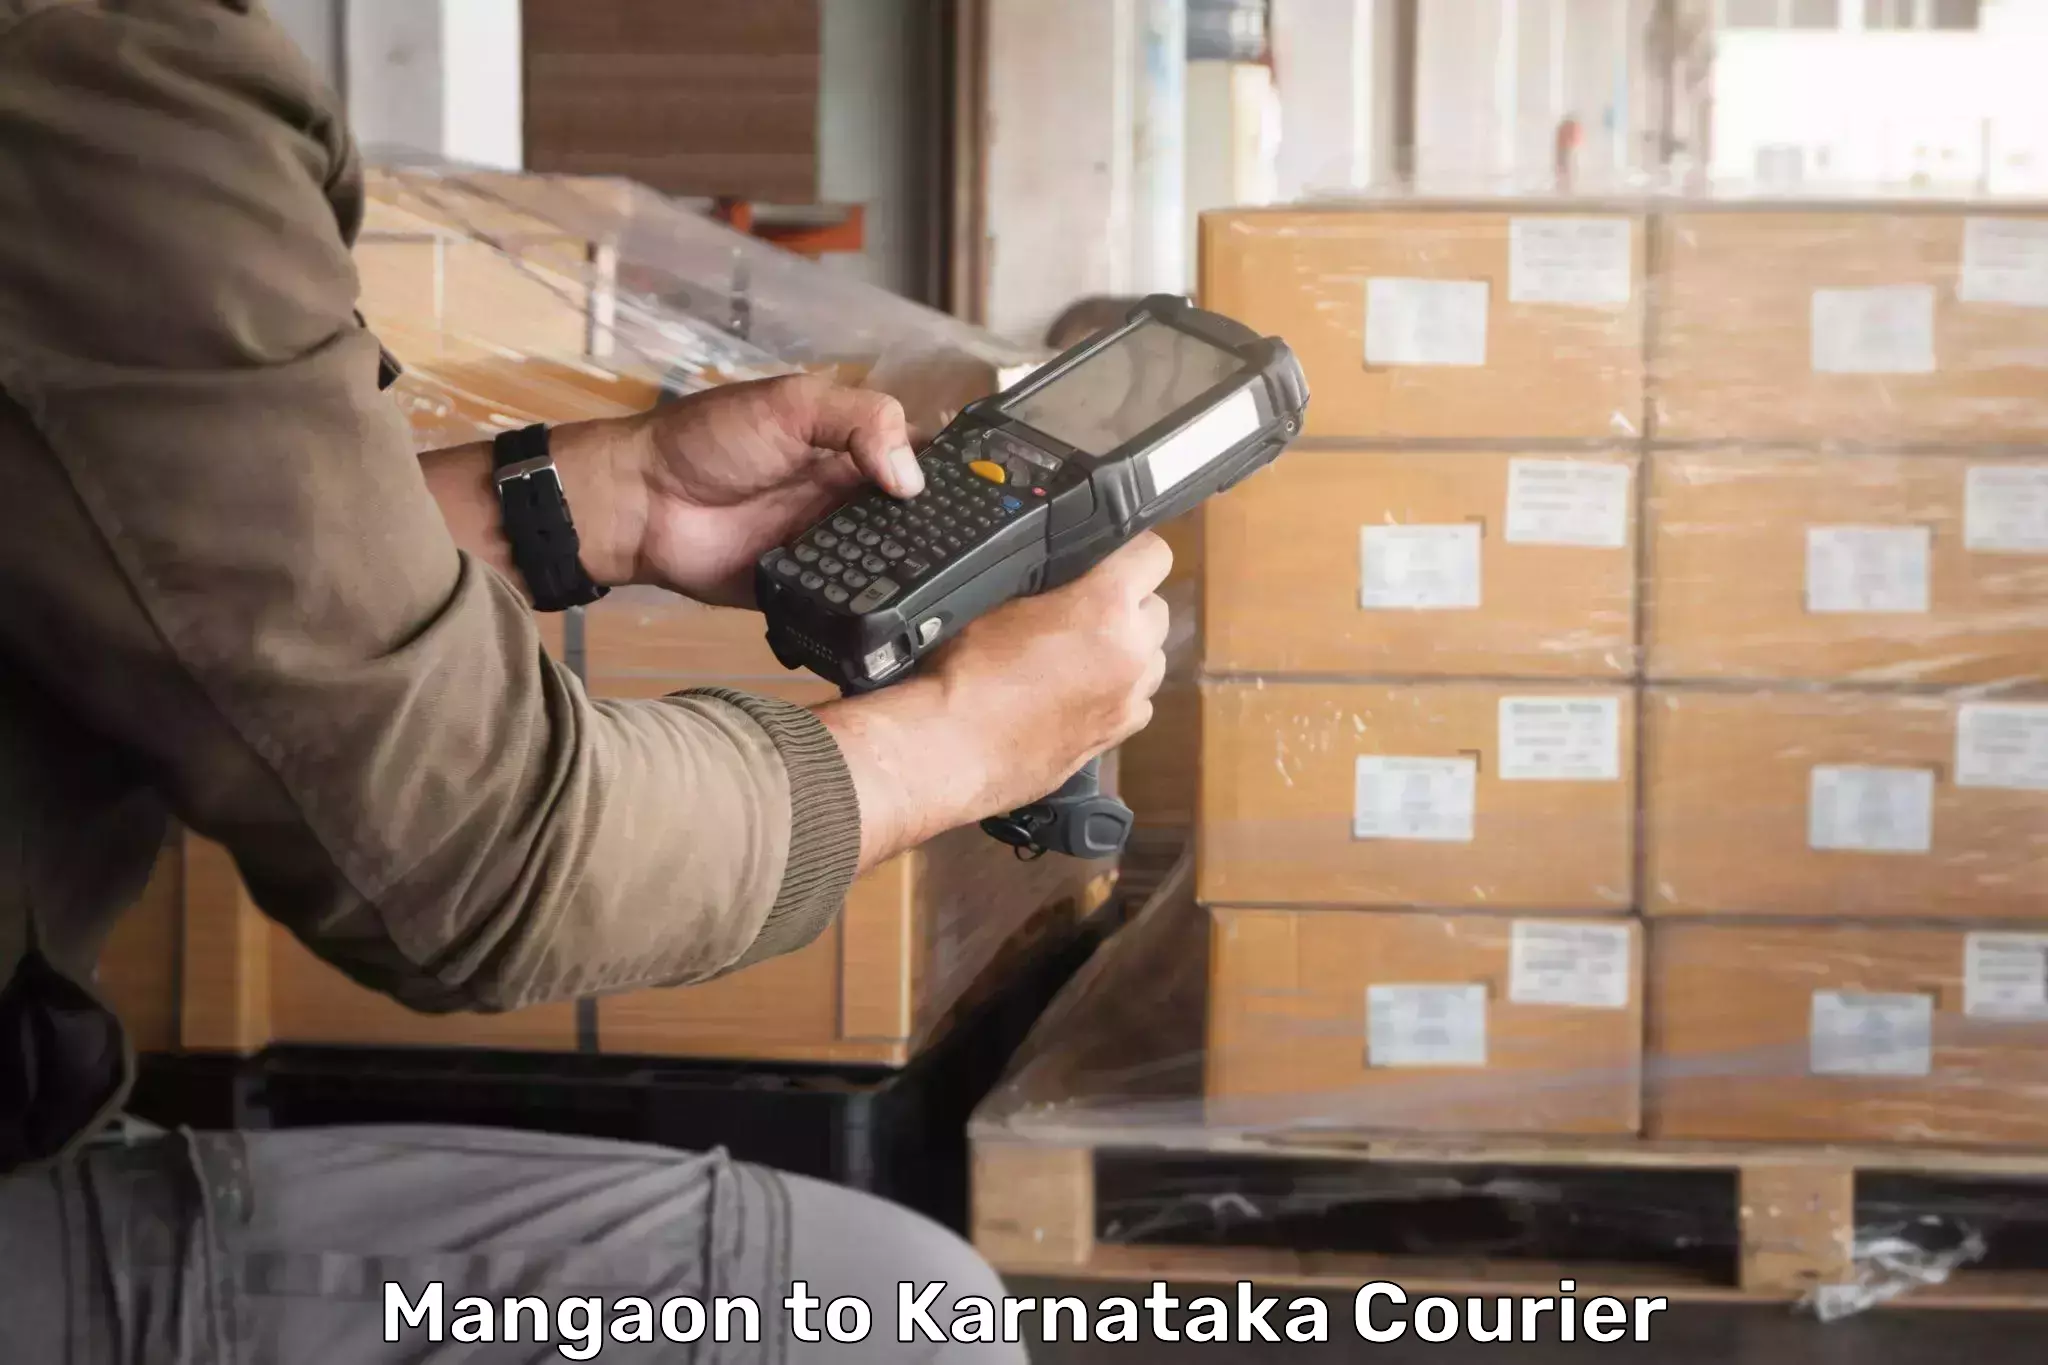 Reliable courier service Mangaon to Mundgod